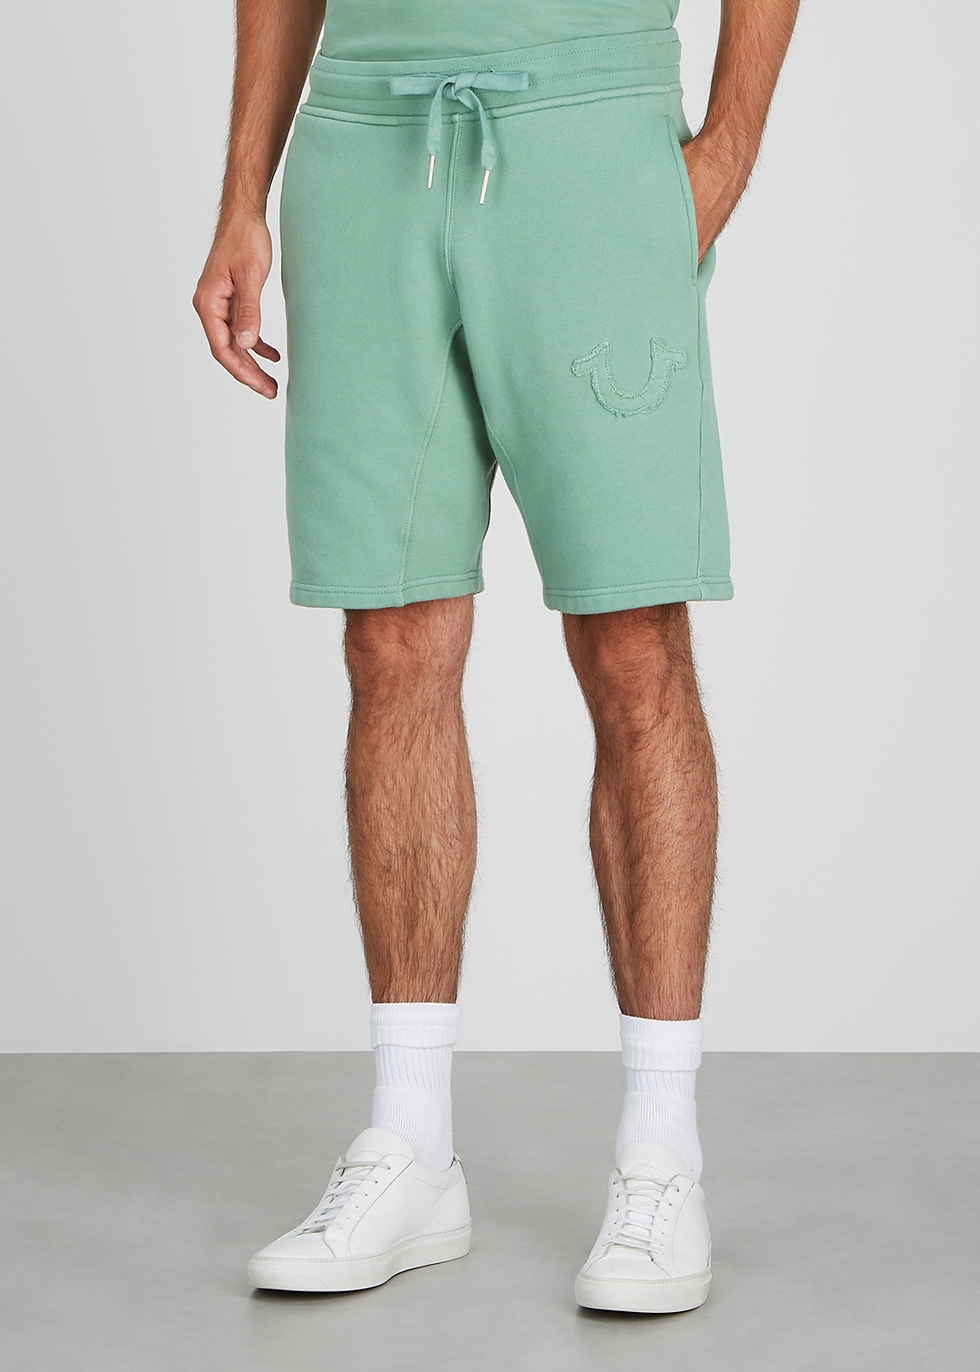 true religion cotton shorts